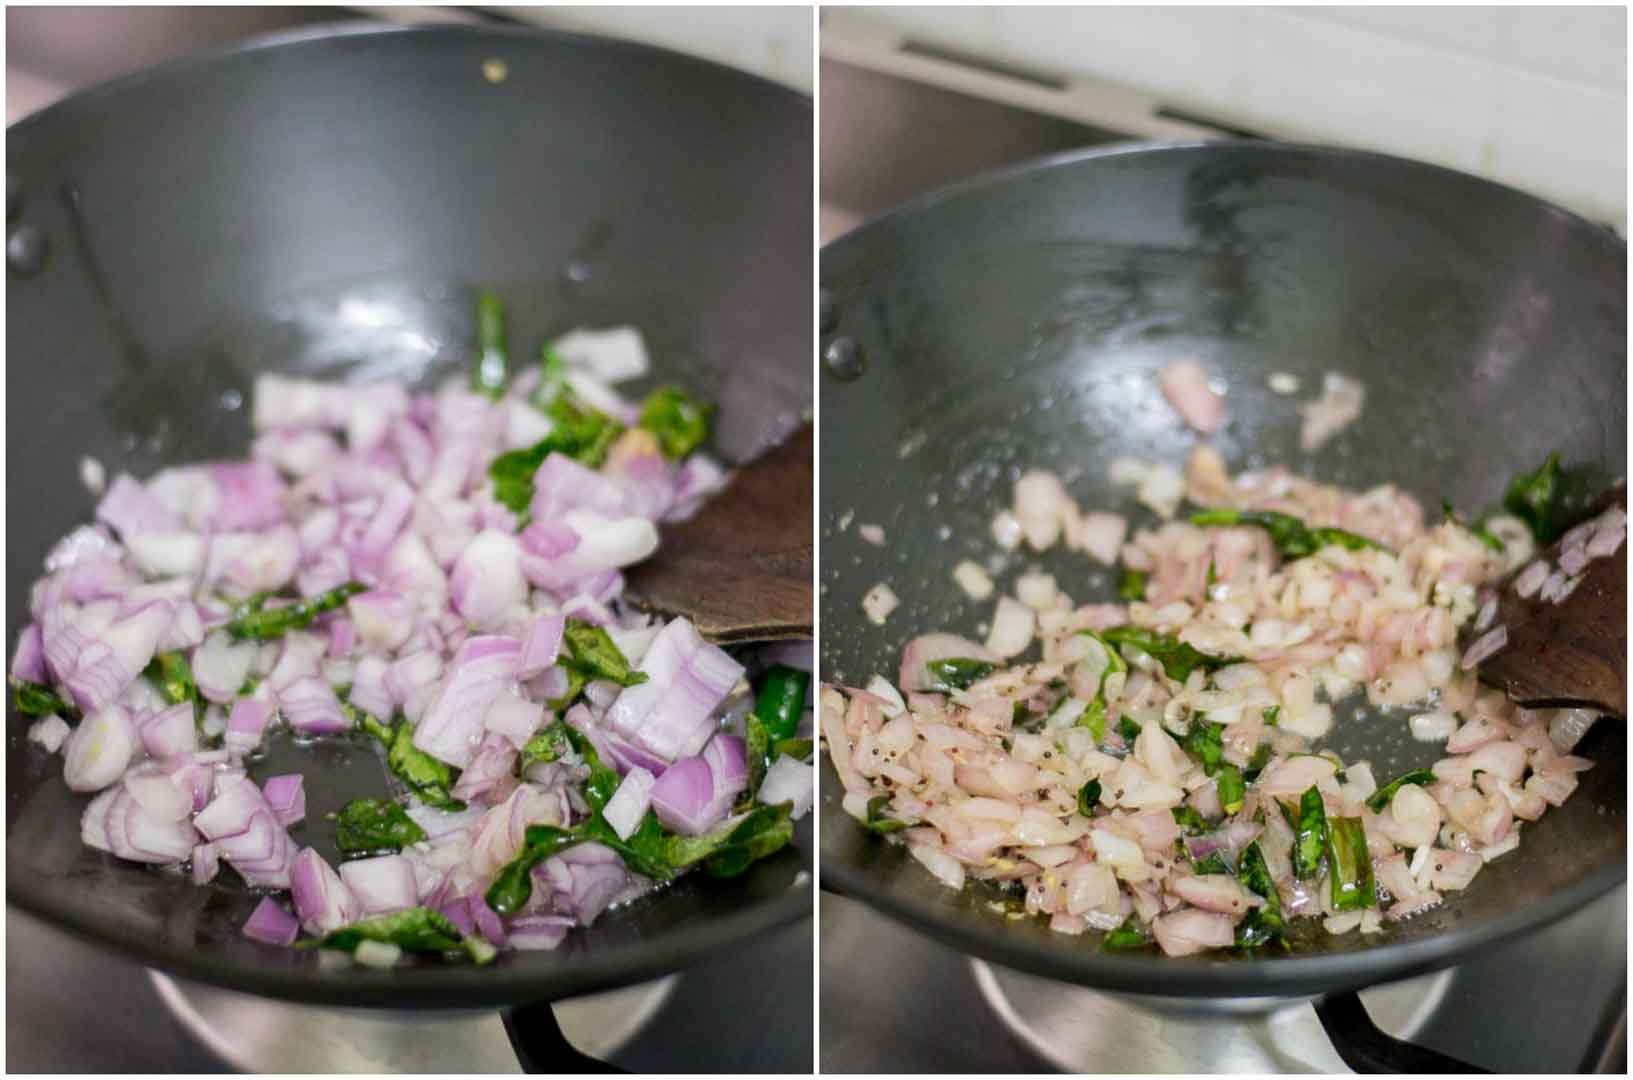 thakkali-kadaintha-kurma-recipe-6